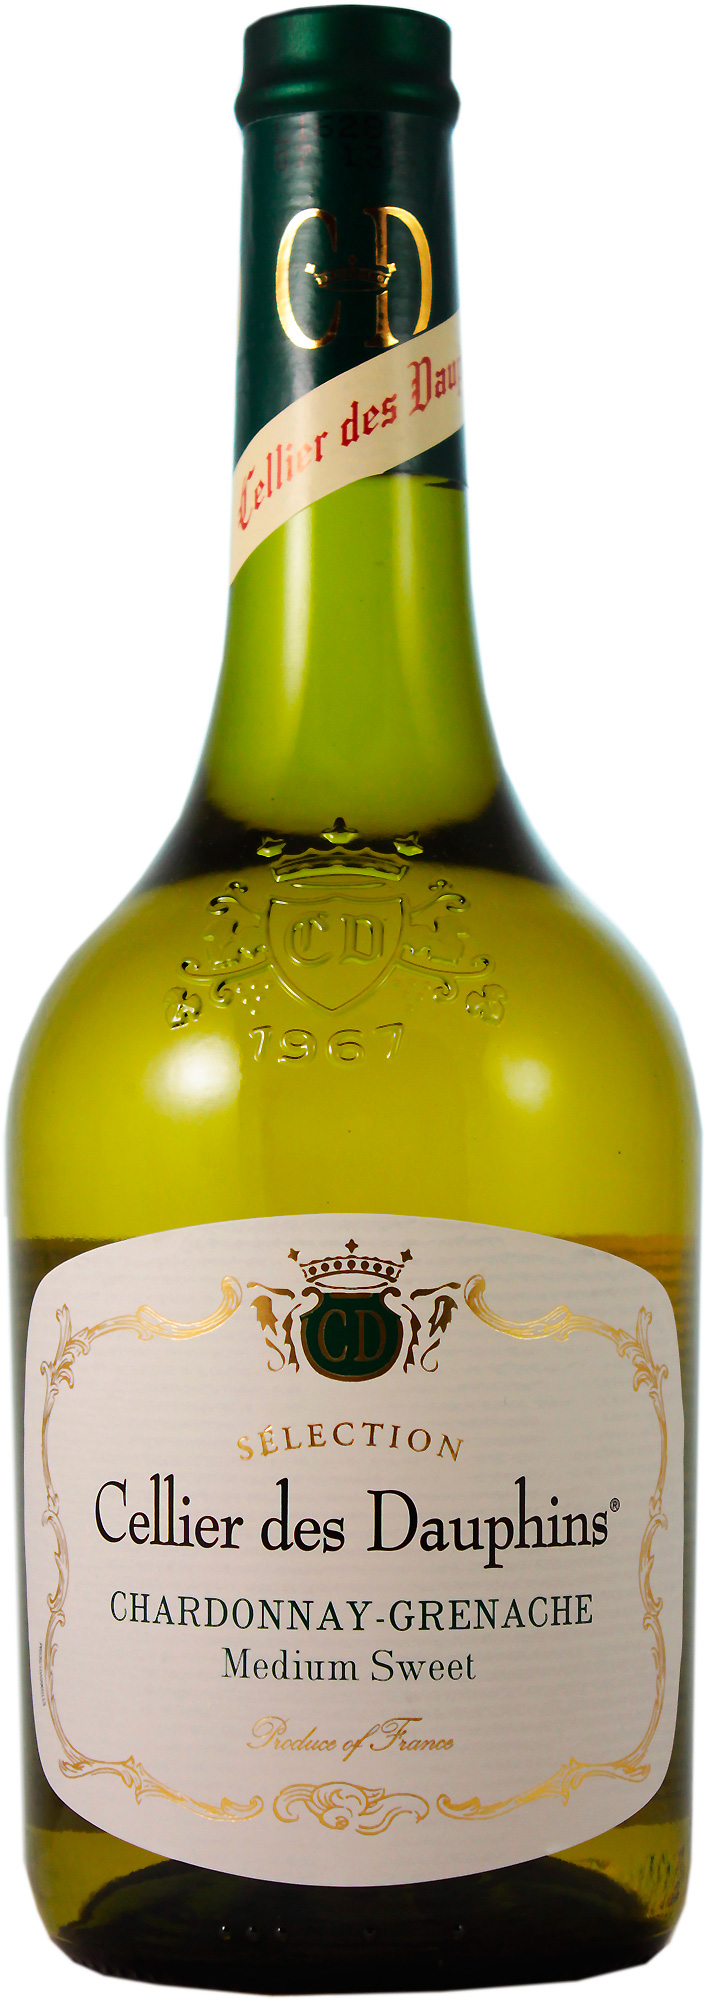 Купить Cellier des Dauphins Chardonnay Grenache в Москве